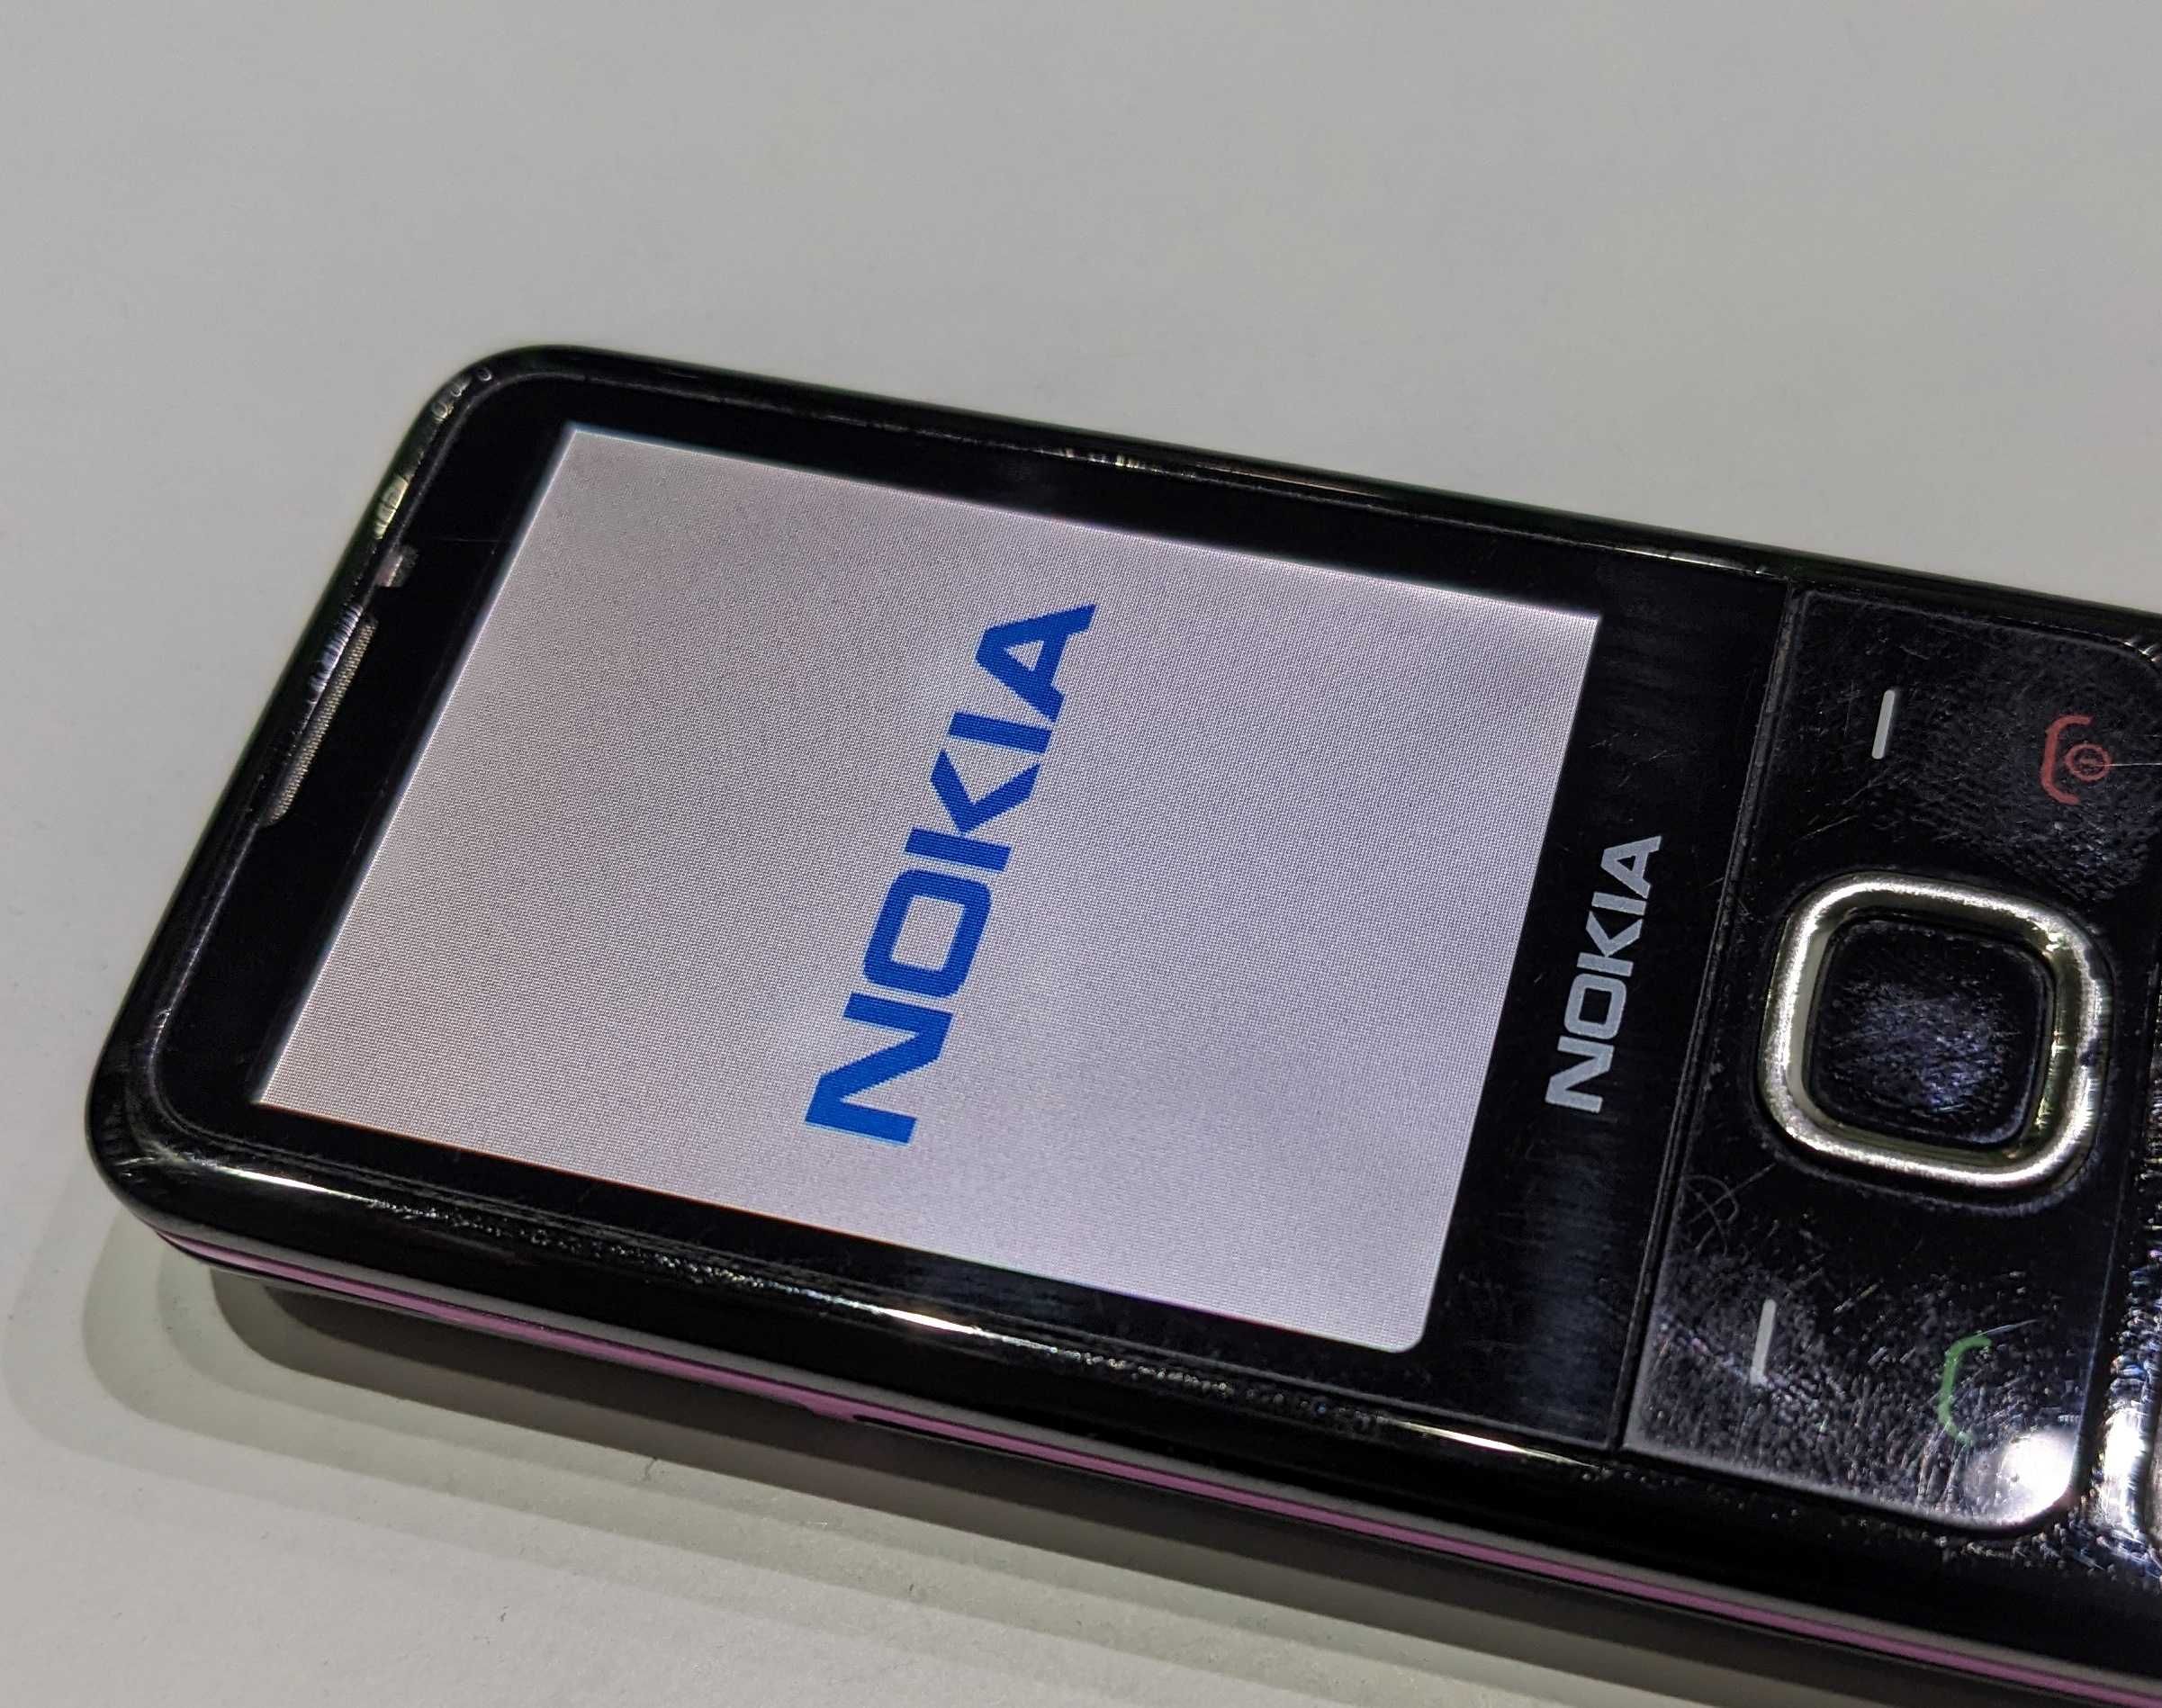 Nokia 6700 Classic телефон (Оригинал)